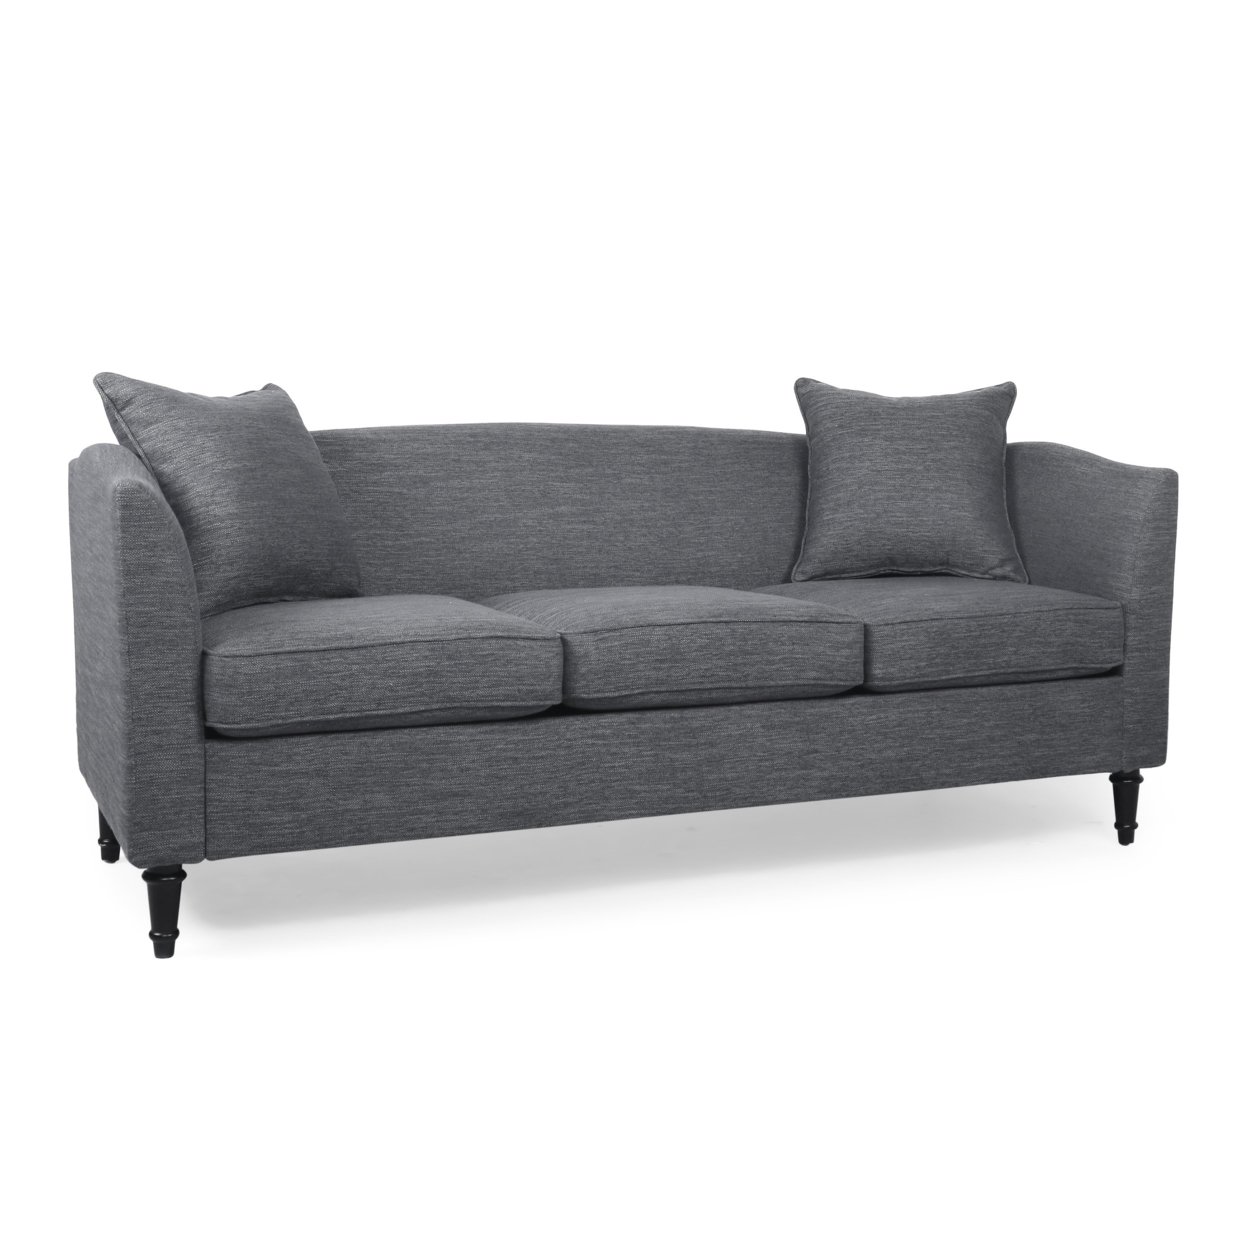 Doerun Contemporary Upholstered 3 Seater Sofa - Dark Brown/beige